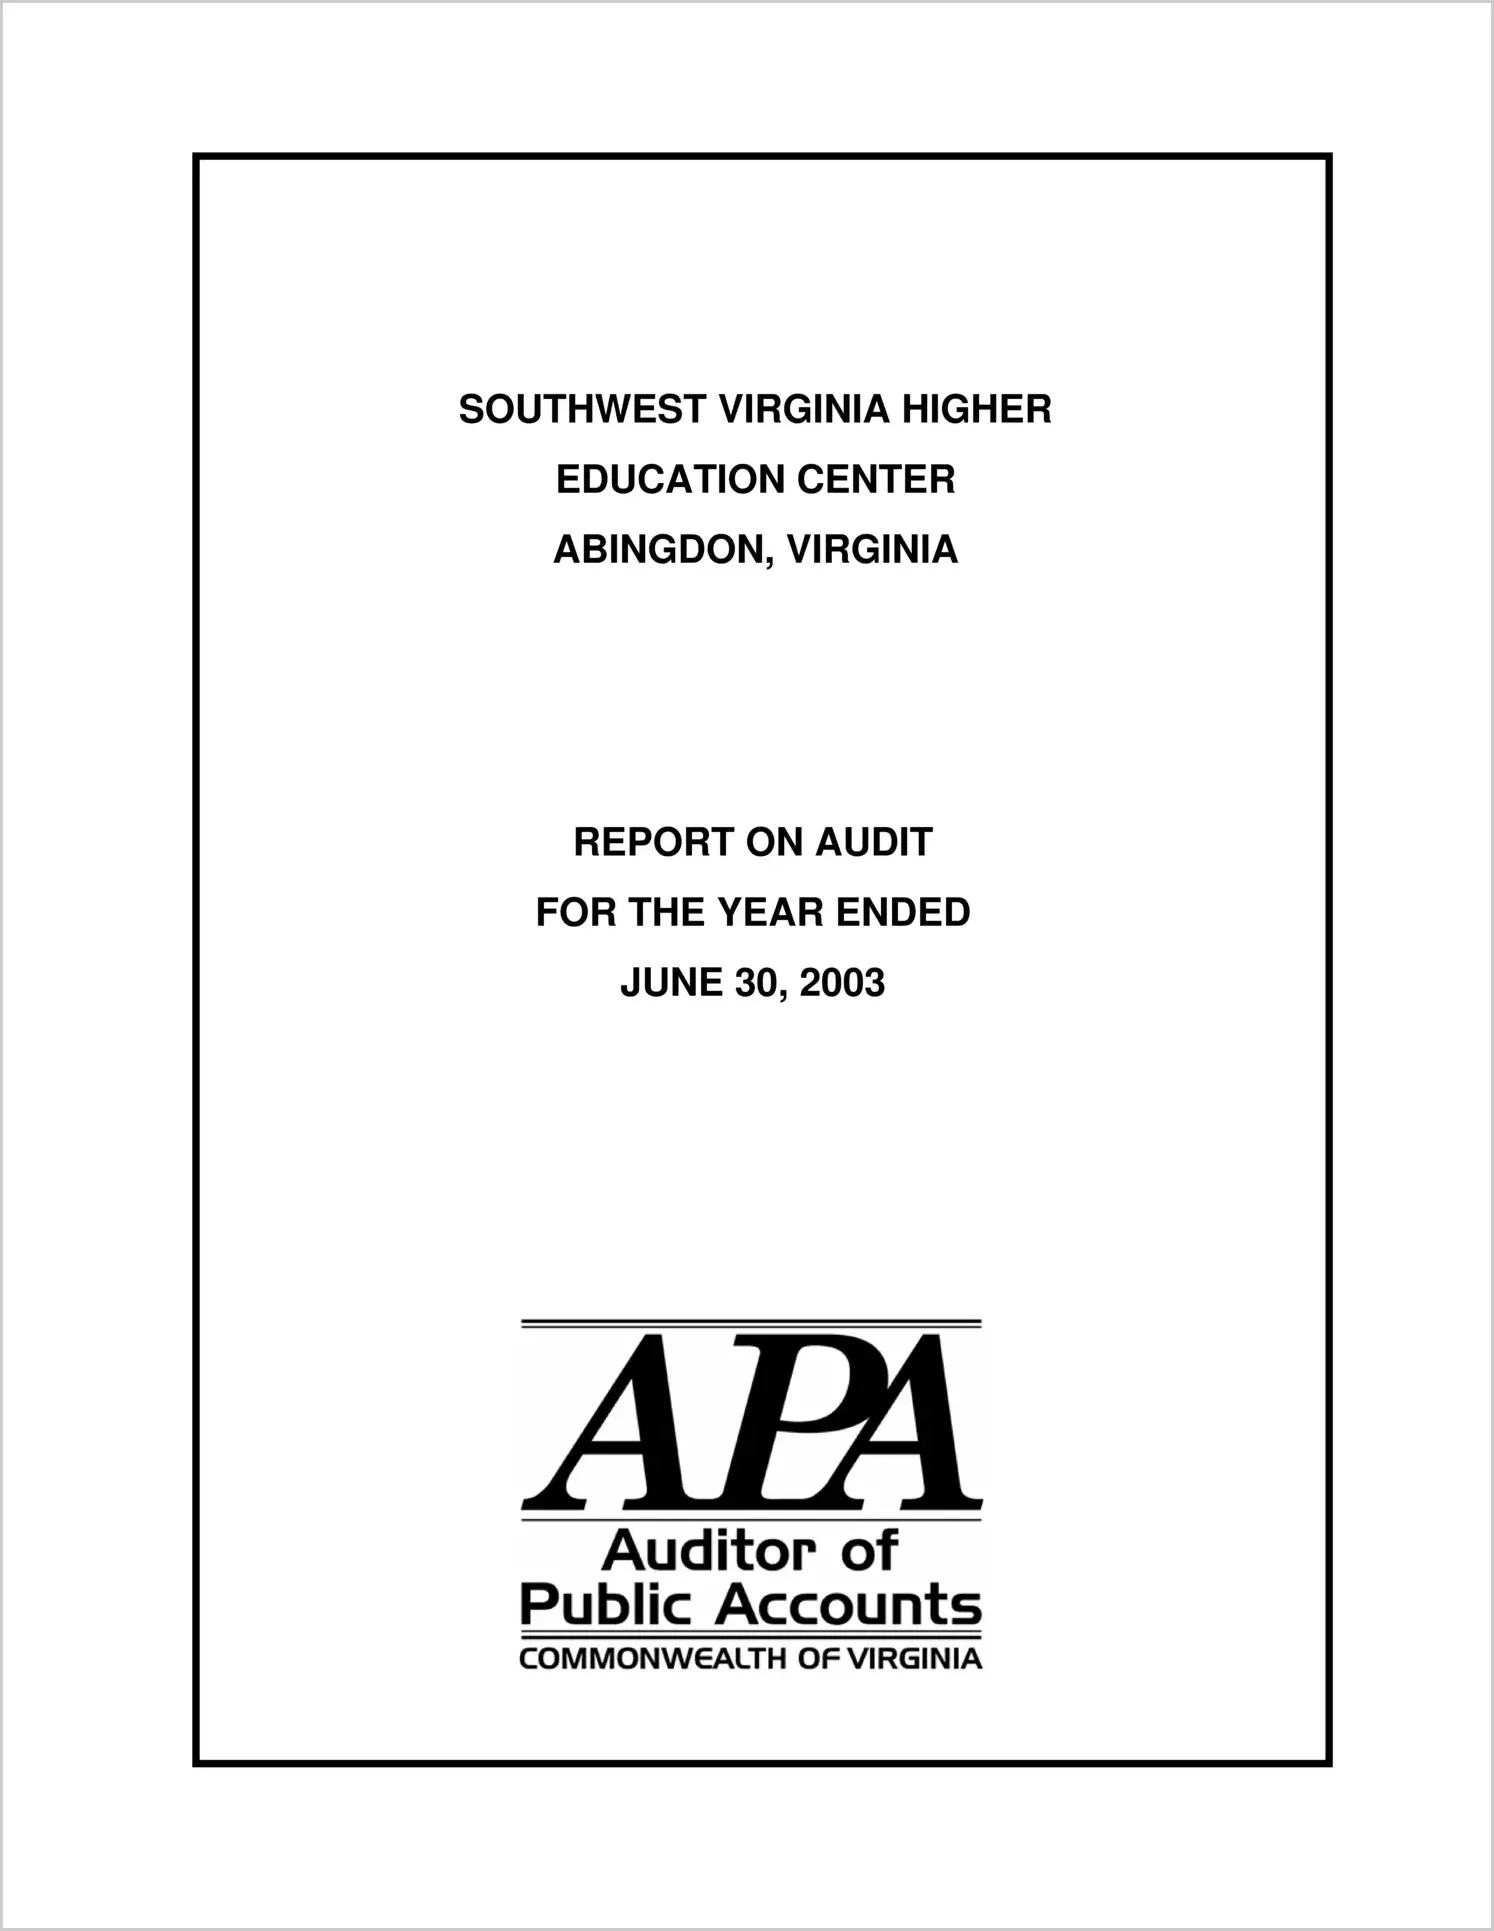 Southwest Virginia Higher Education Center for the year ended June 30, 2003